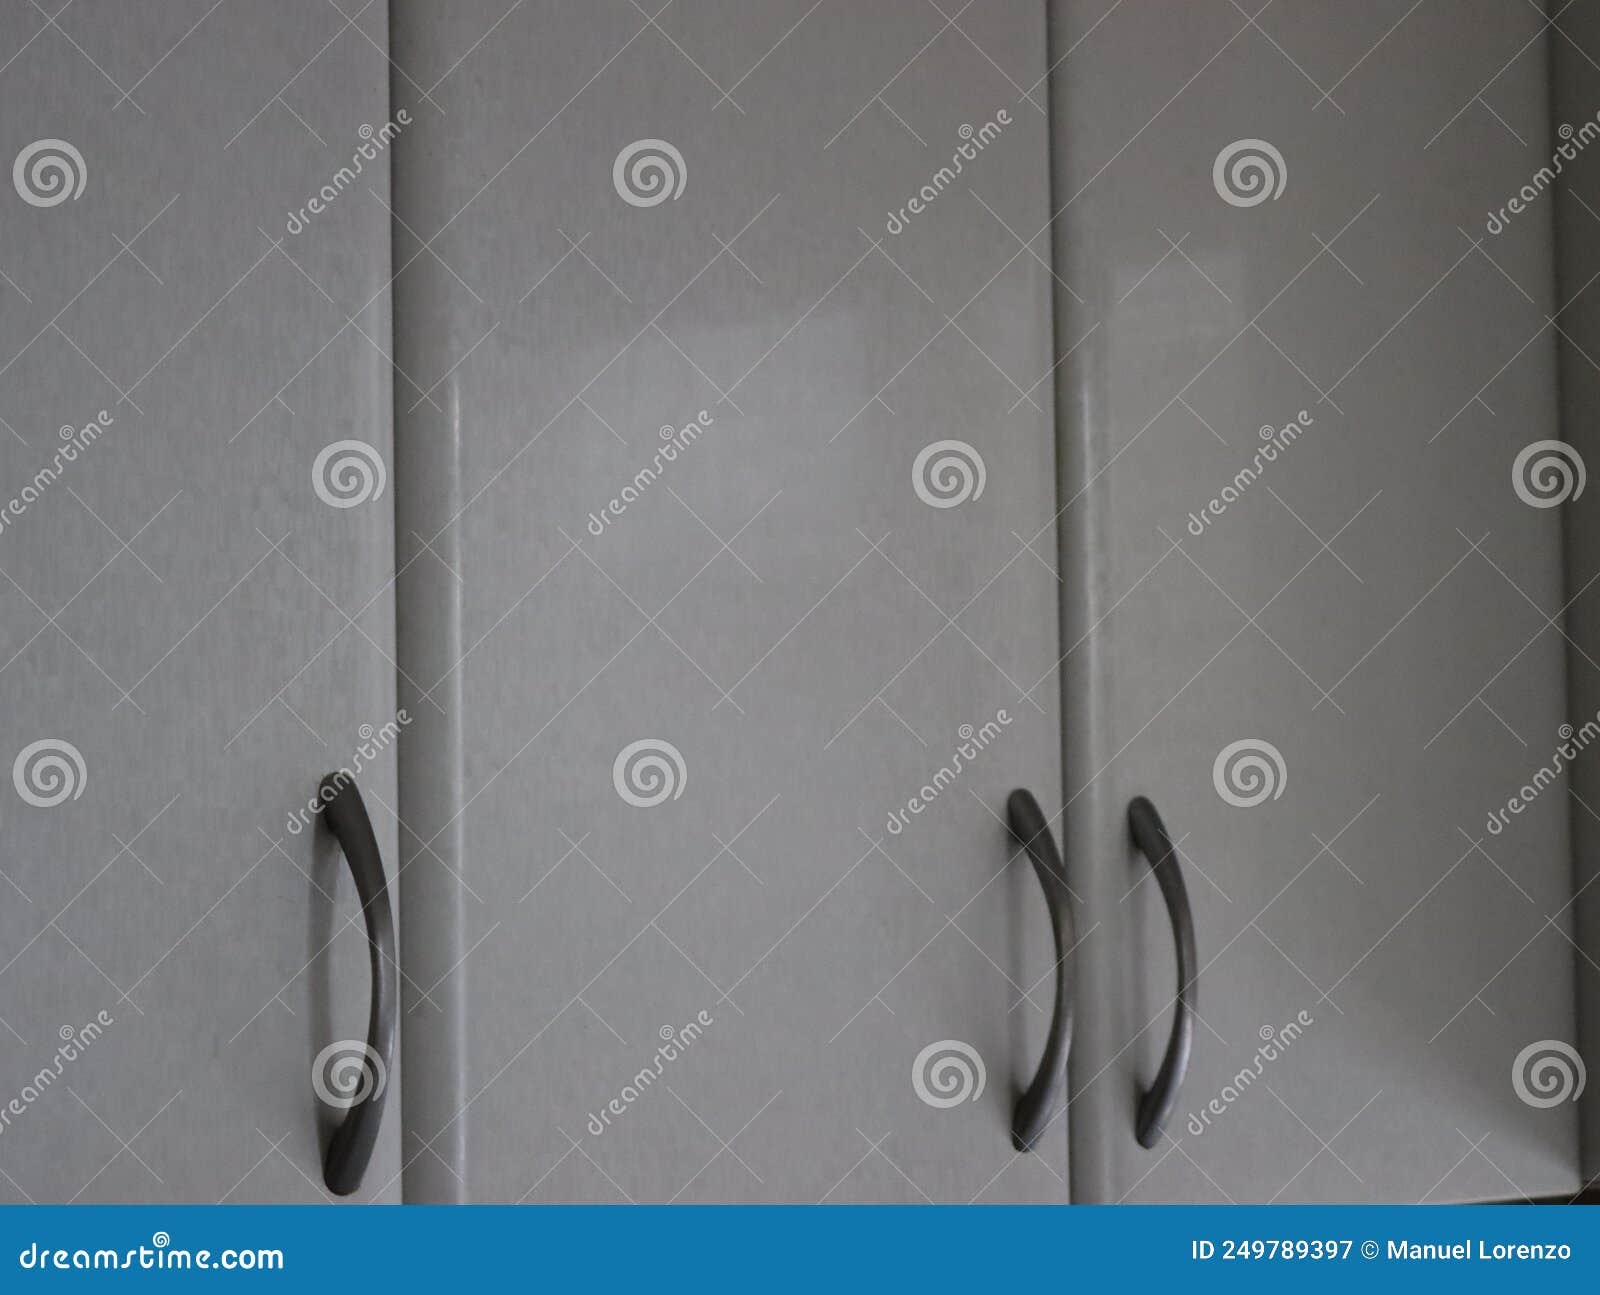 doors closet kitchen handles close open privacy save